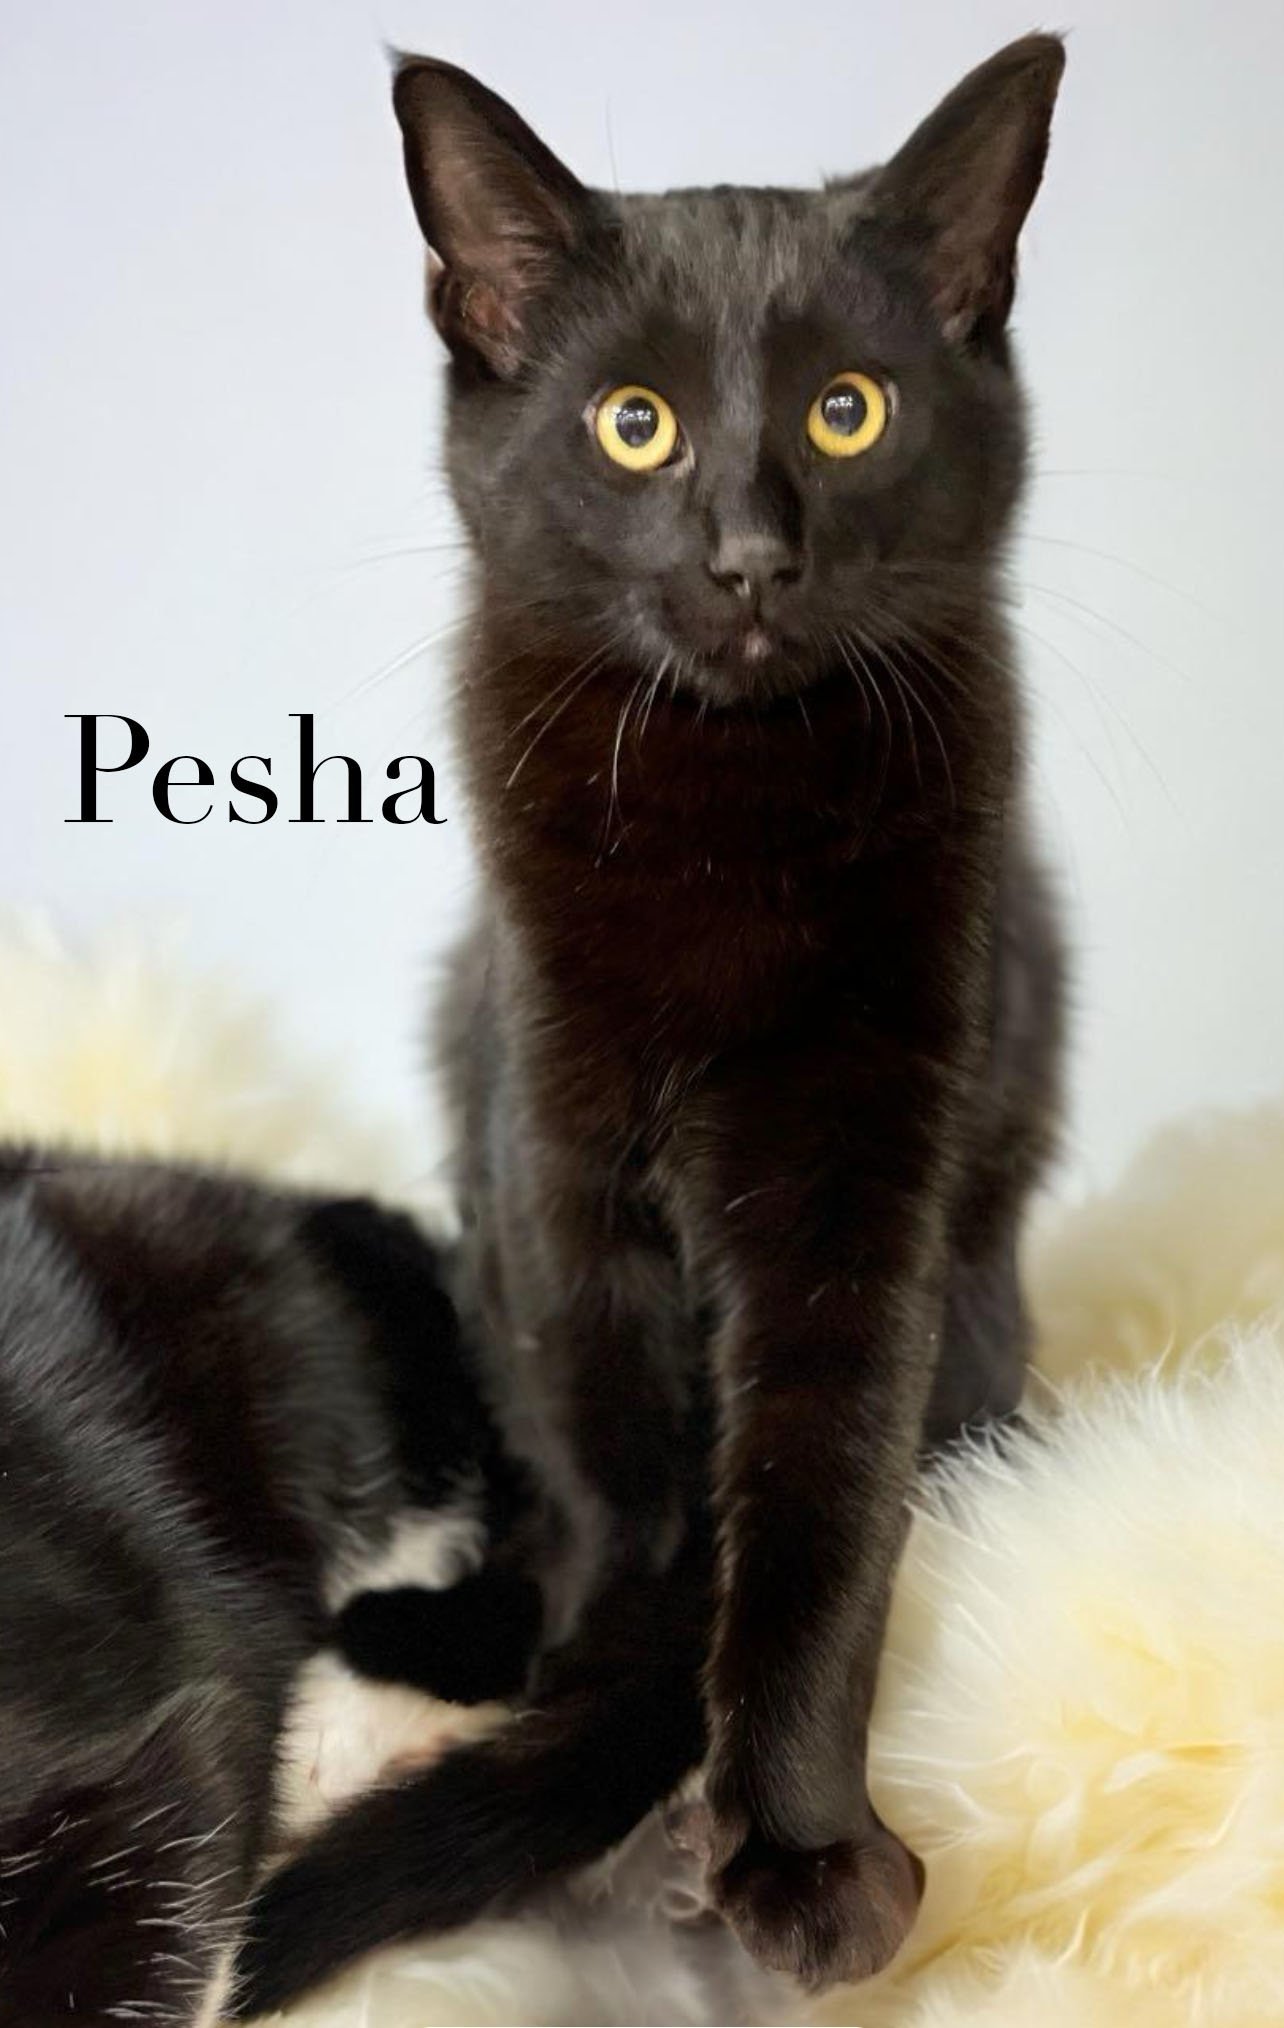 Besha & Pesha